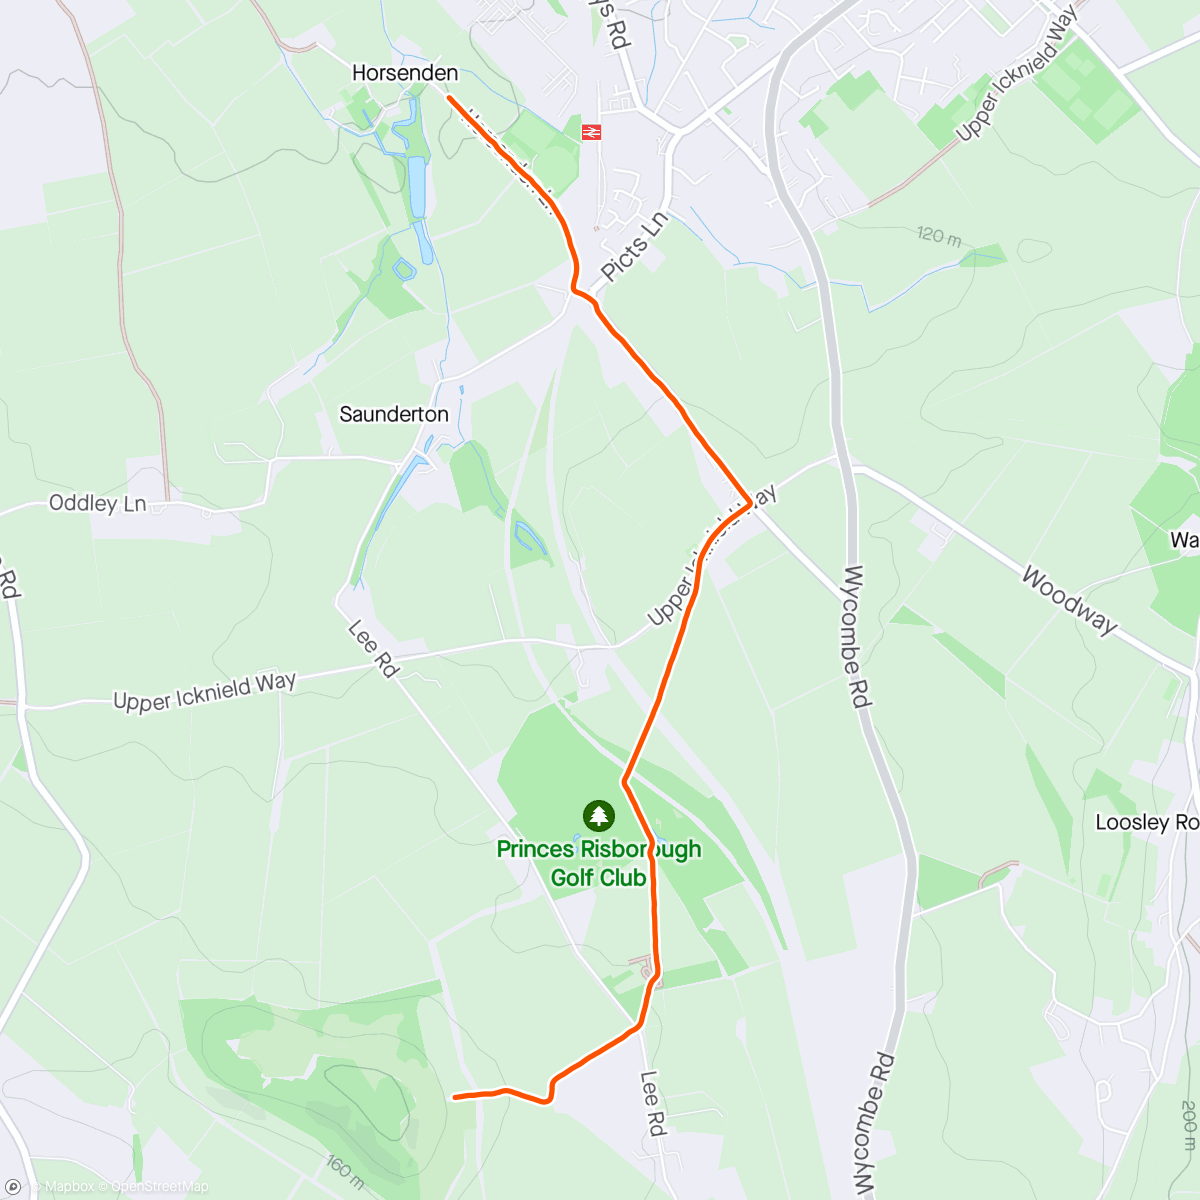 「Lodge Hill to Horsenden trail run」活動的地圖